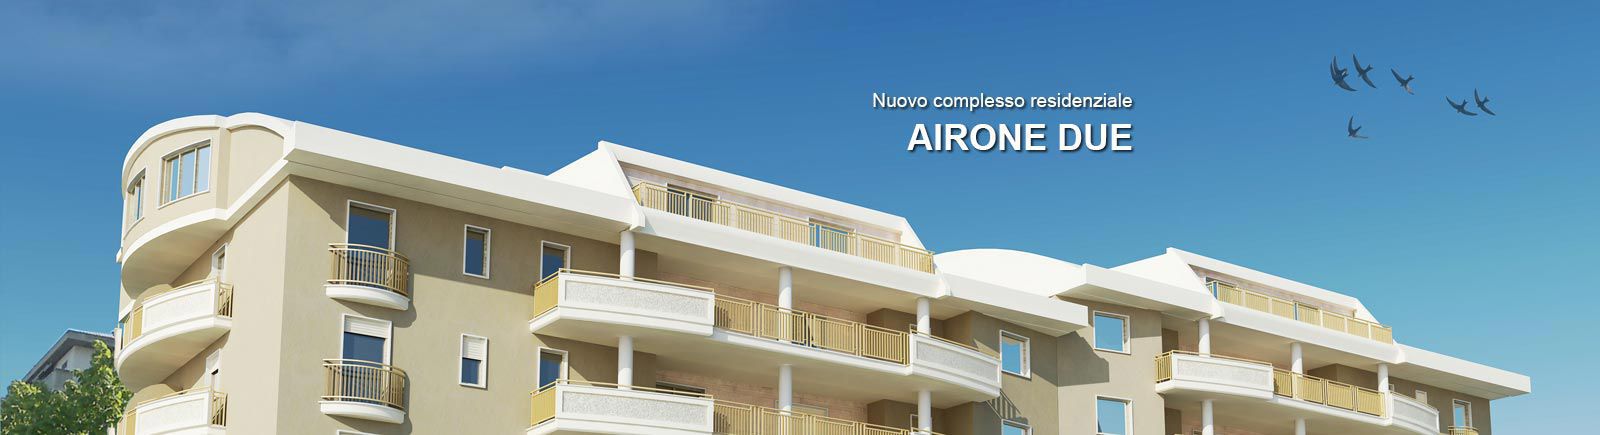 Nuovo complesso residenziale AIRONE DUE c